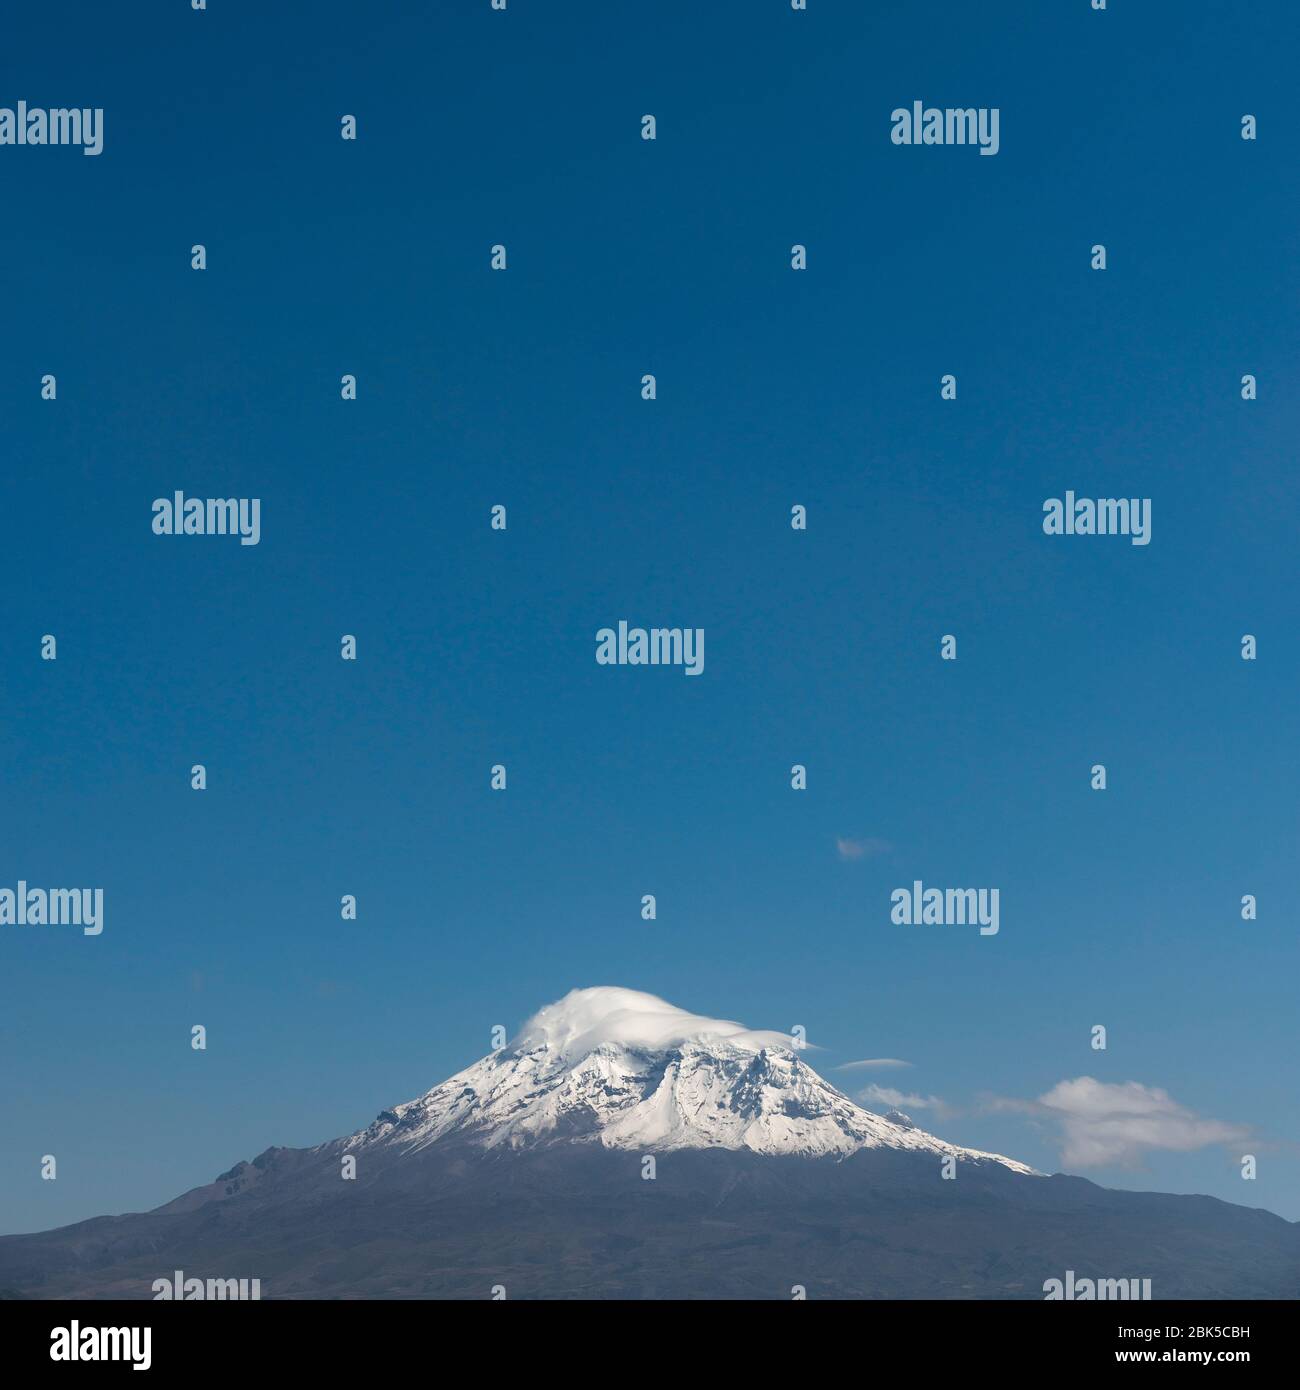 Square format of the snowcapped Chimborazo Volcano peak with copy space, Andes Mountain Range, Ecuador. Stock Photo